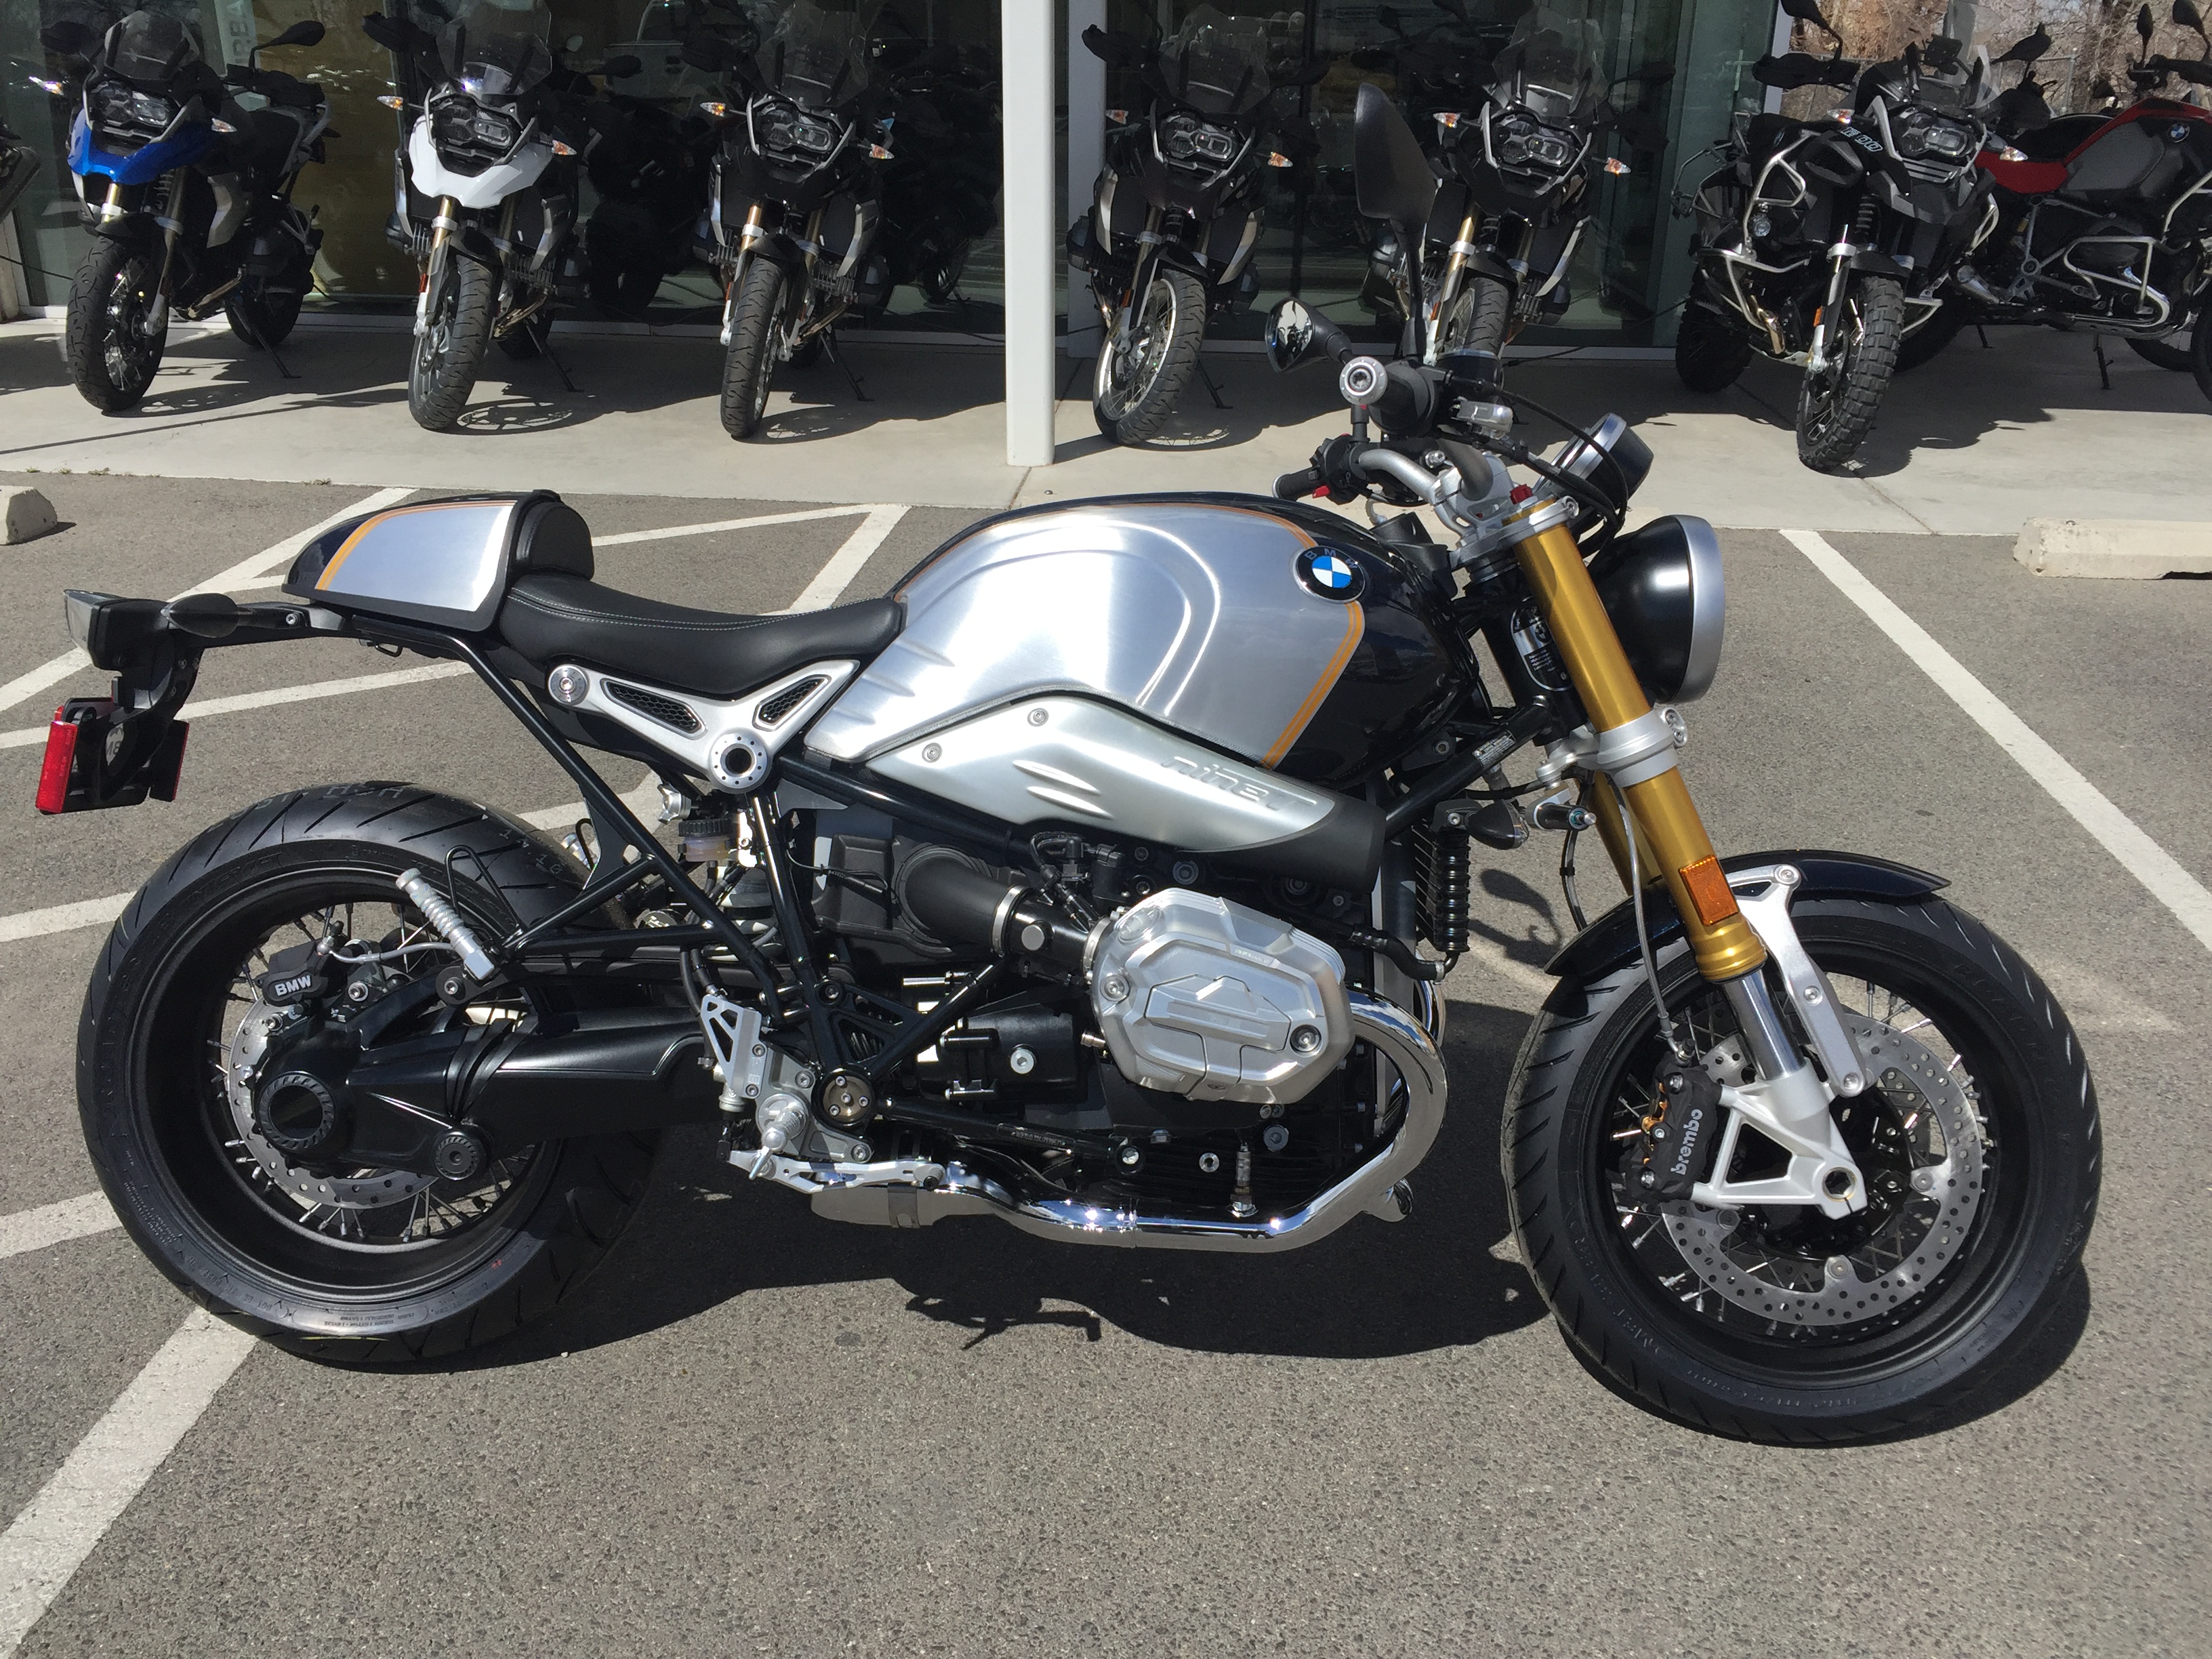 New BMW Motorcycles - 17R9 | Santa Fe BMW Motorcycles | Santa Fe, NM